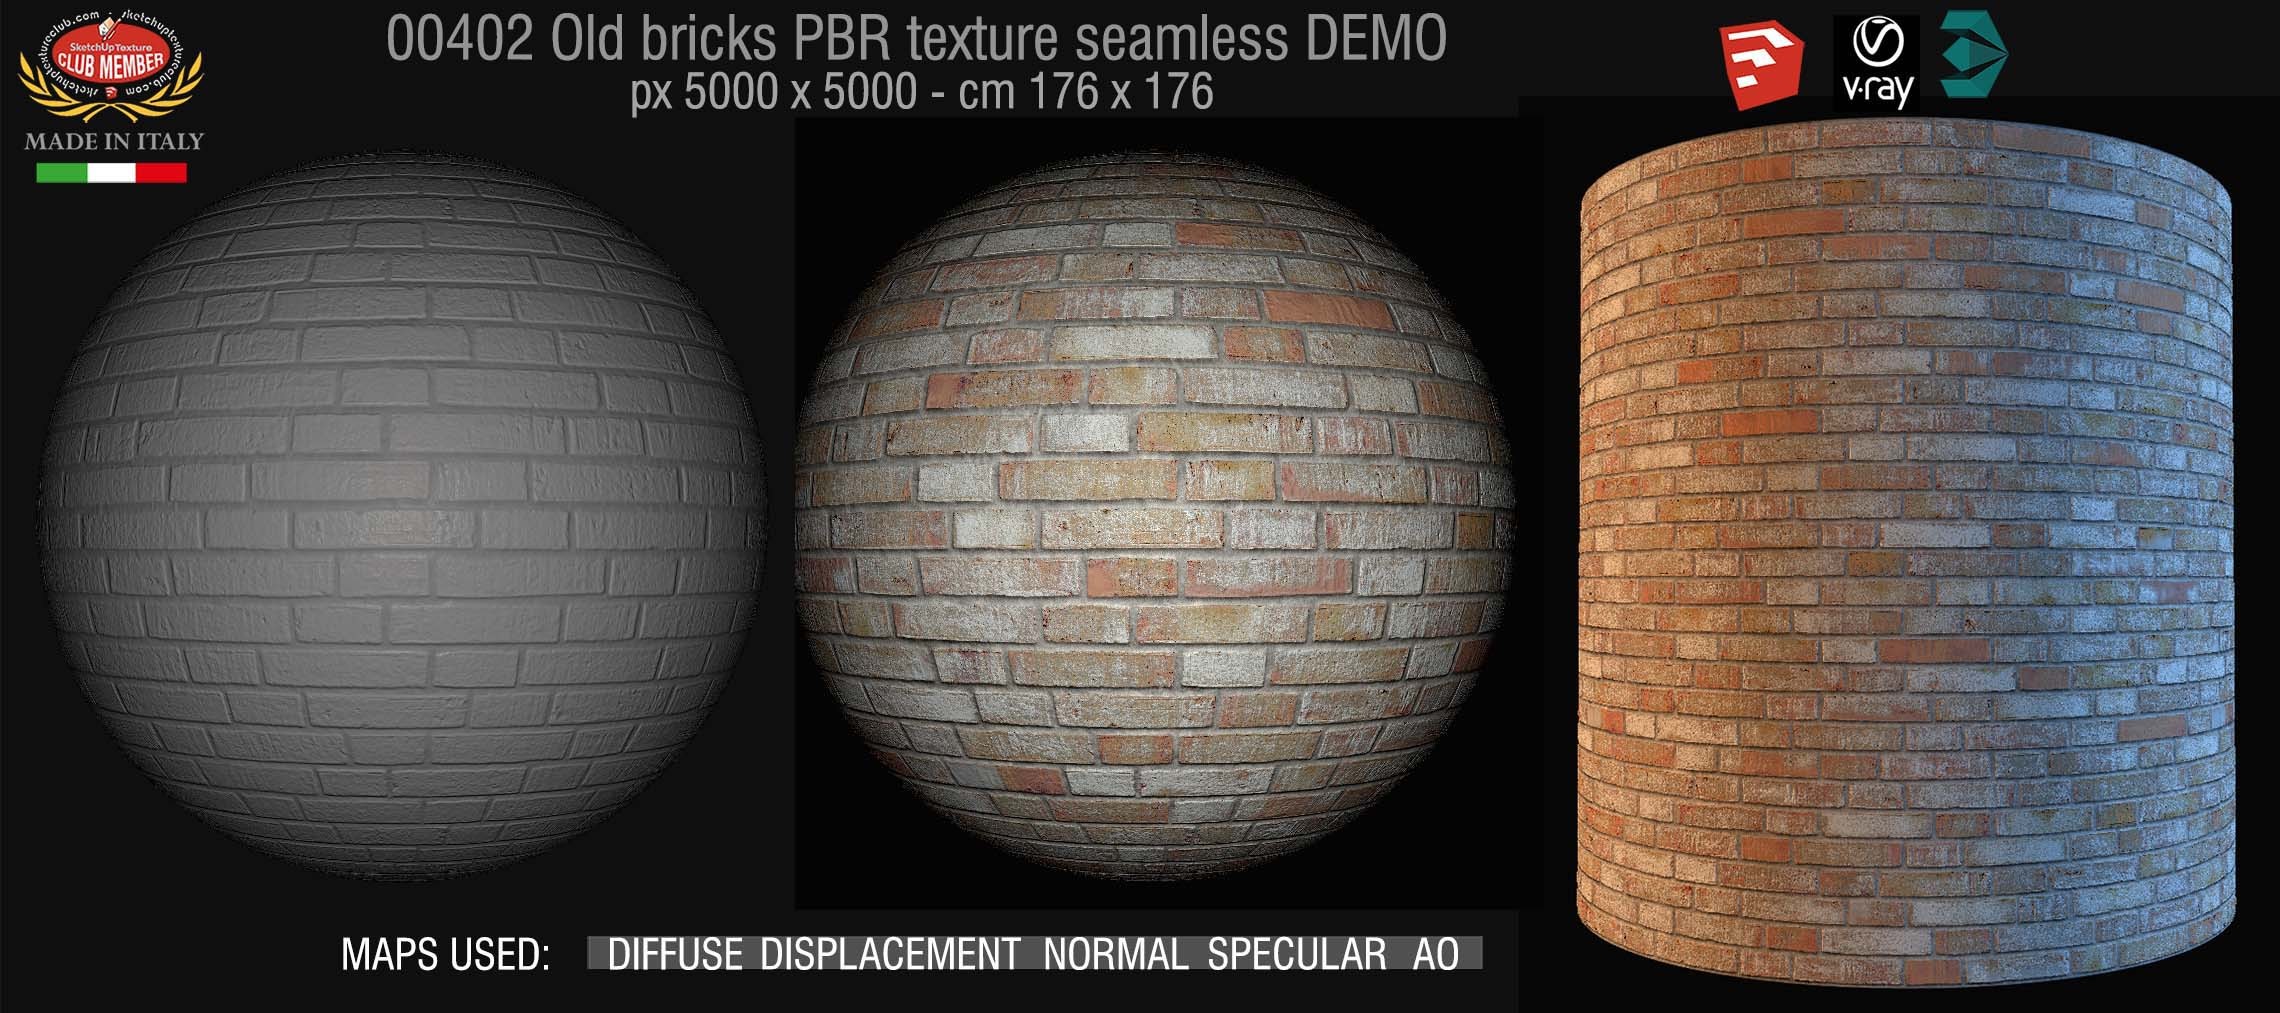 00402 Old bricks PBR texture seamless DEMO